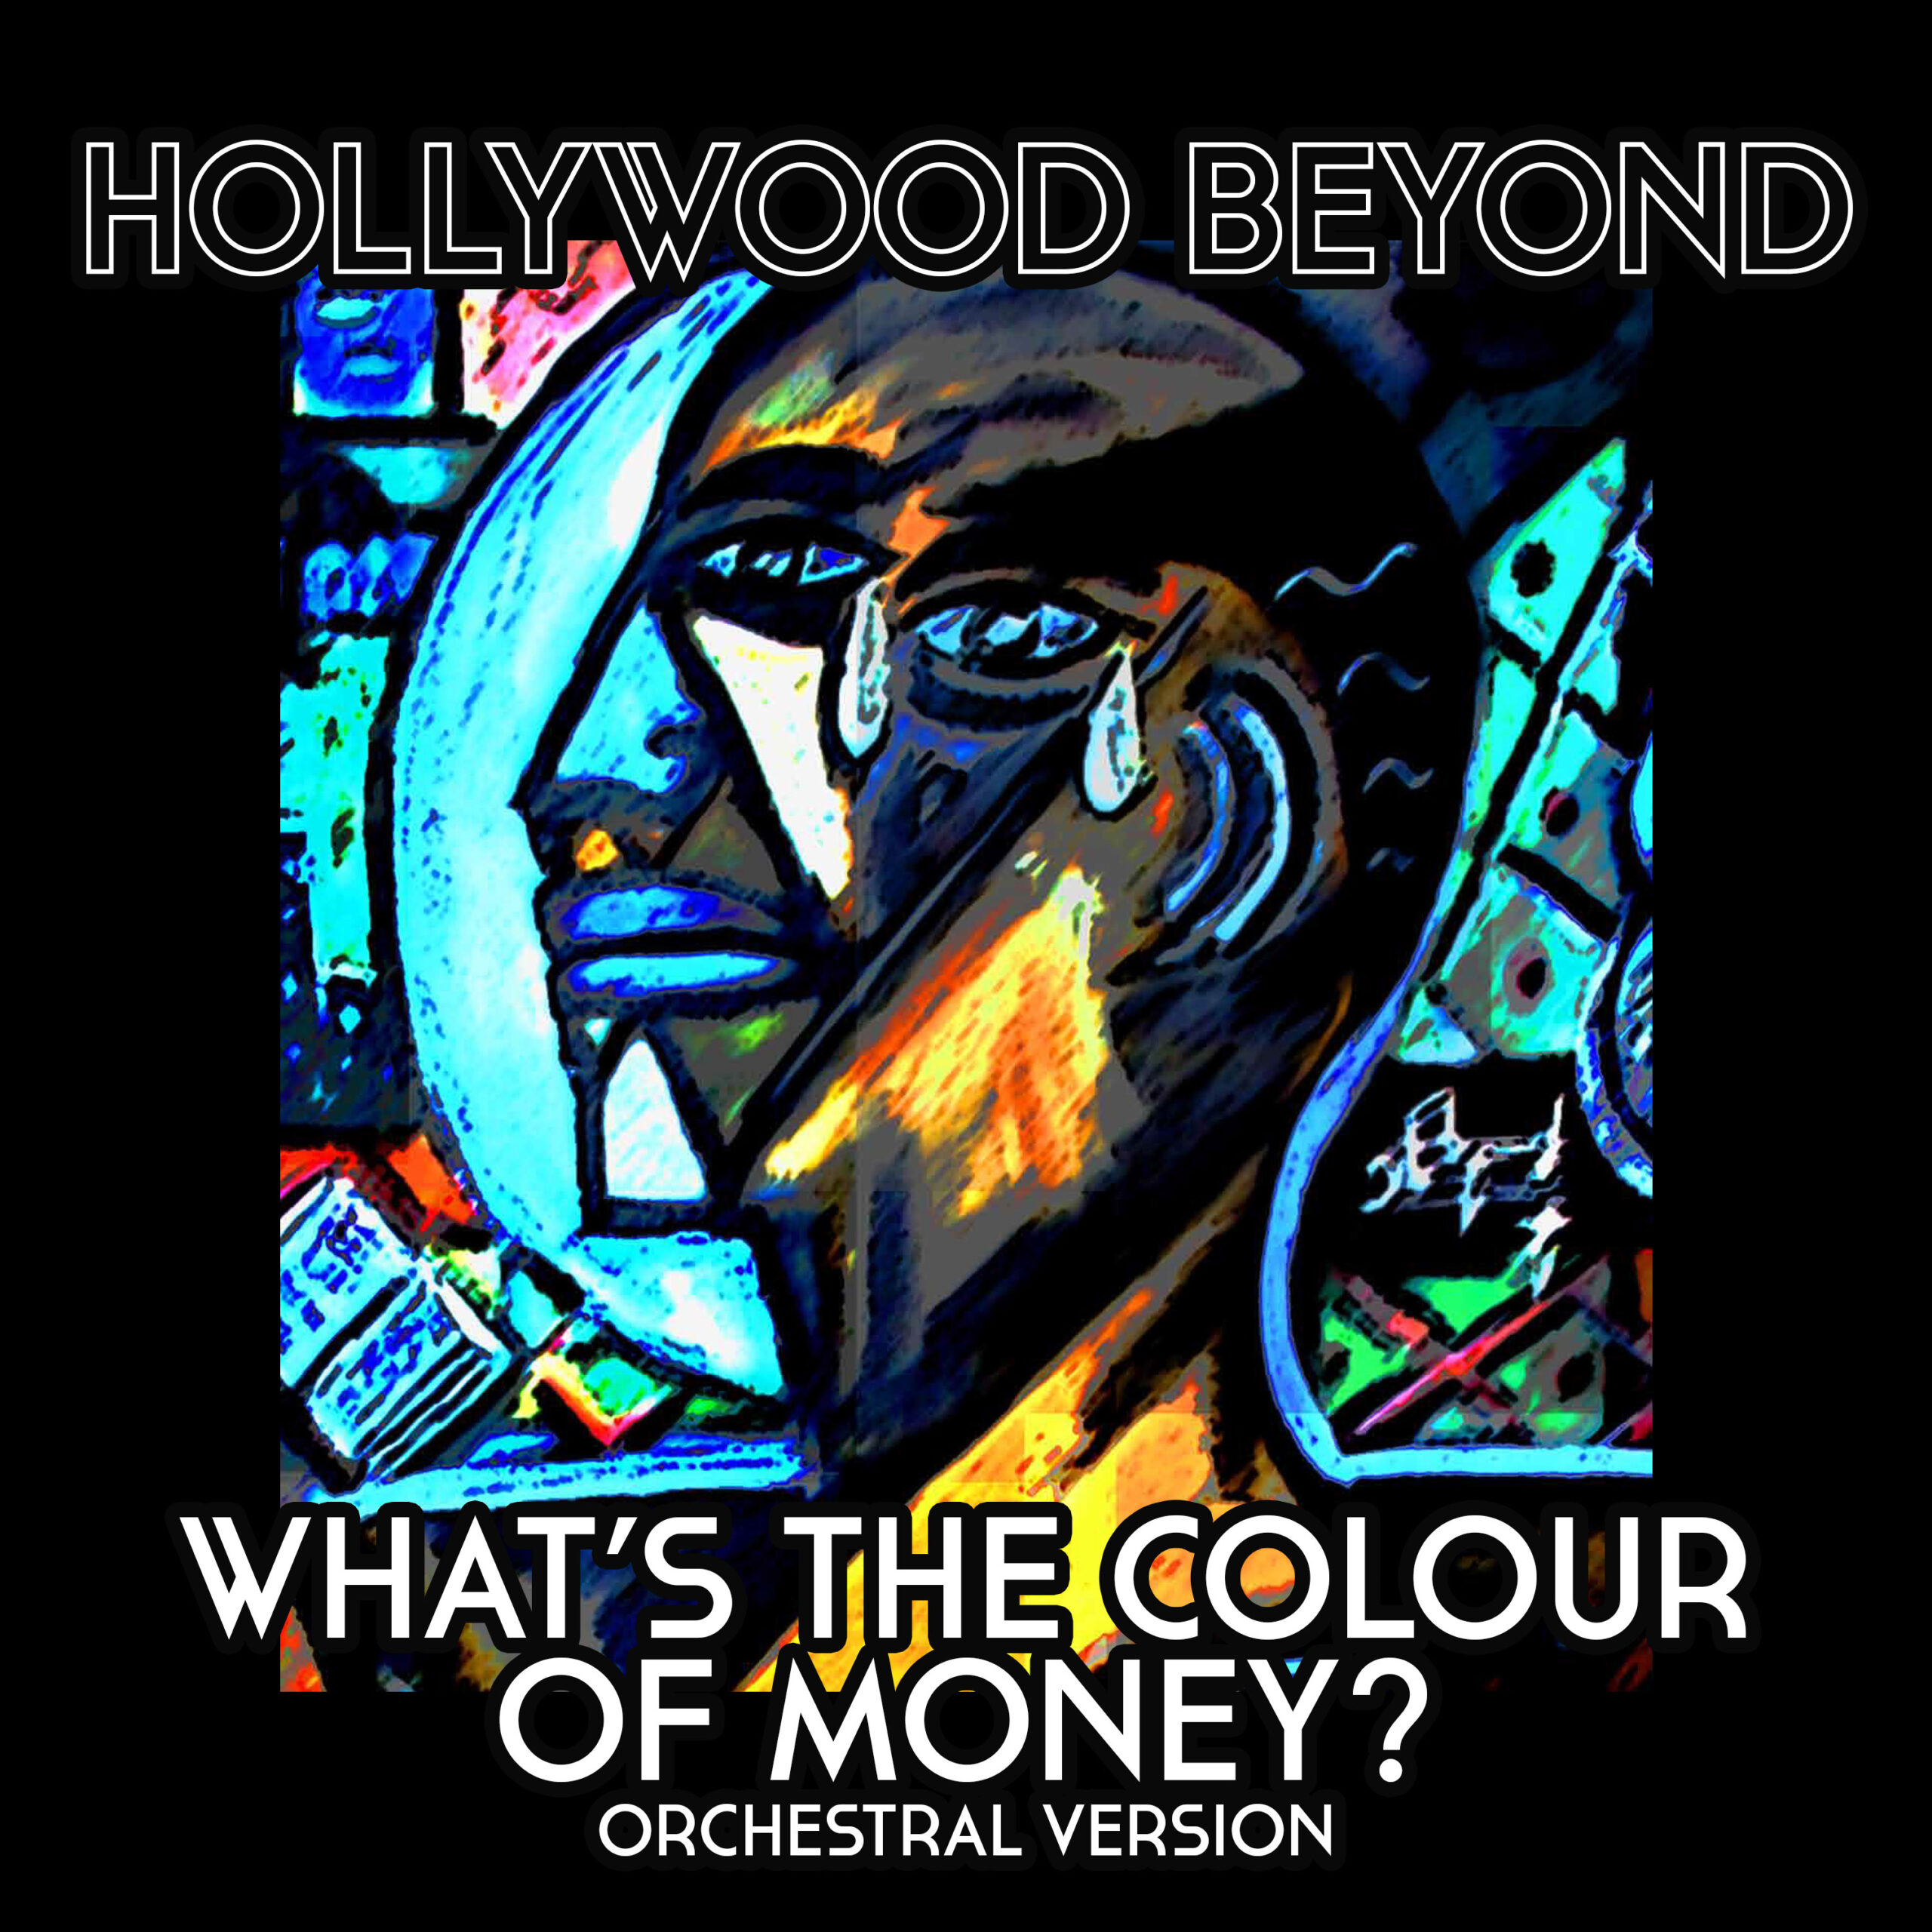  Redescubre los 80s: “What’s The Colour of Money” de Hollywood Beyond en versión orquestal